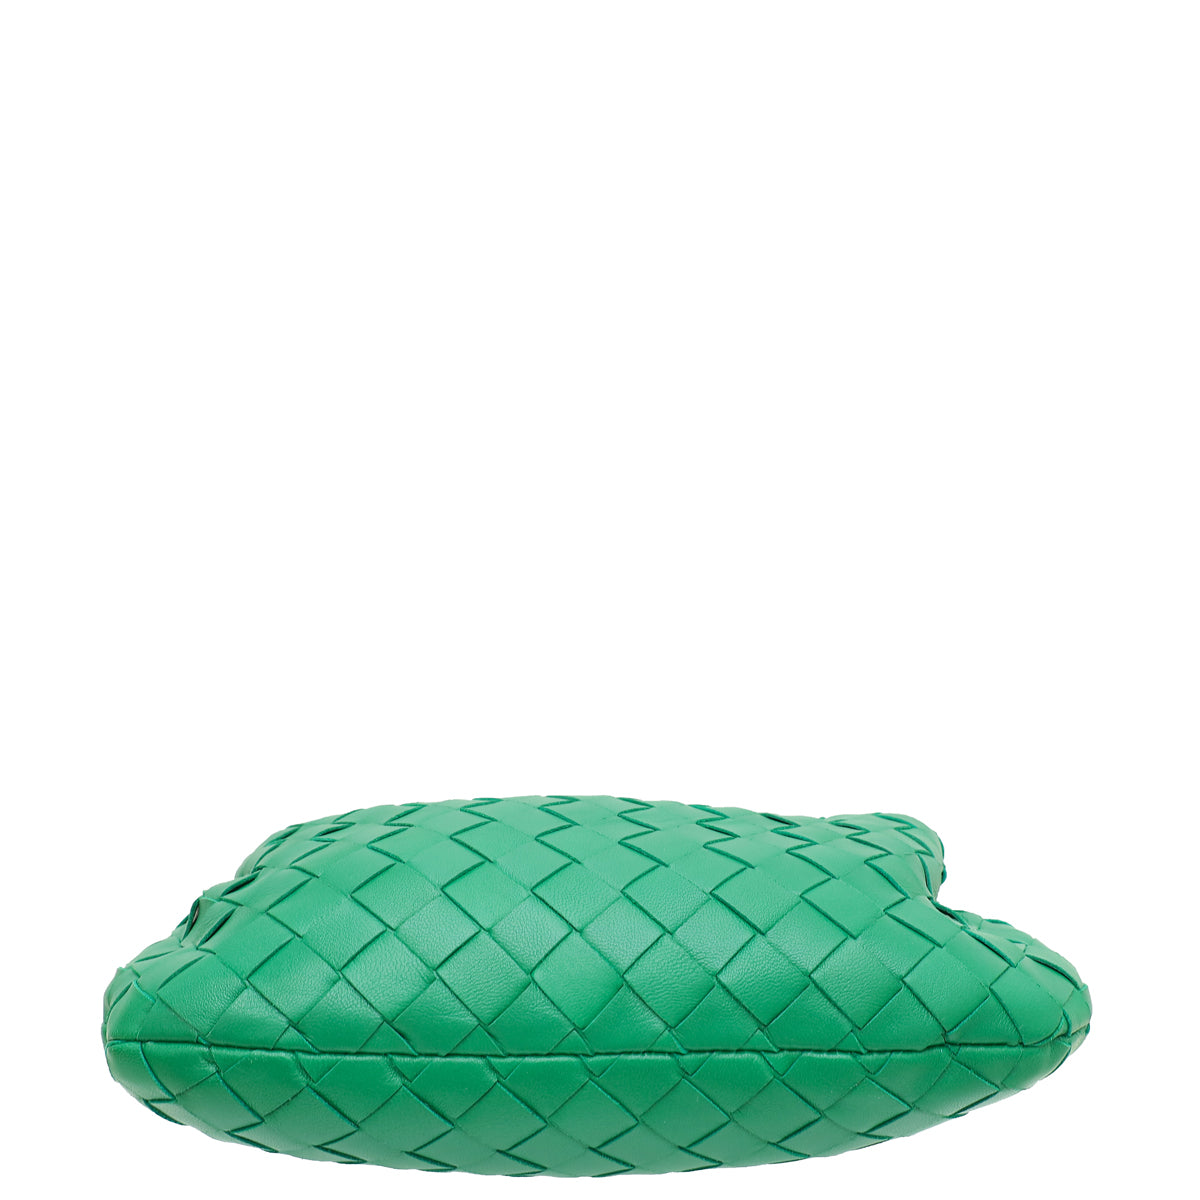 Bottega Veneta Green Intrecciato Nappa Jodie Small Bag